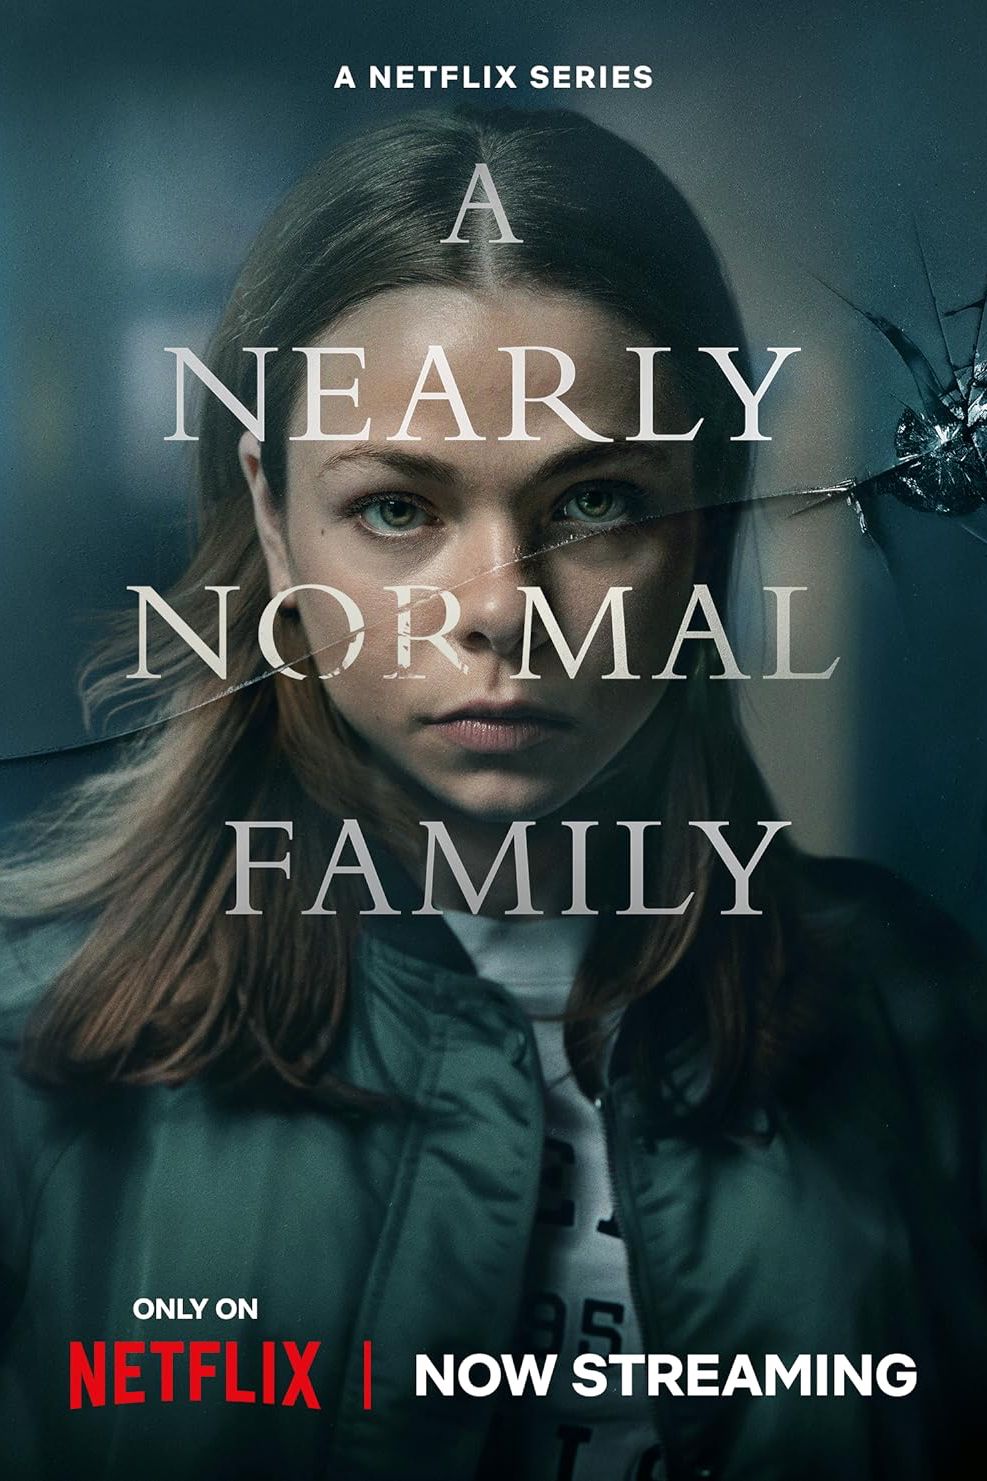 Ein fast normales Familien-Netflix-Poster